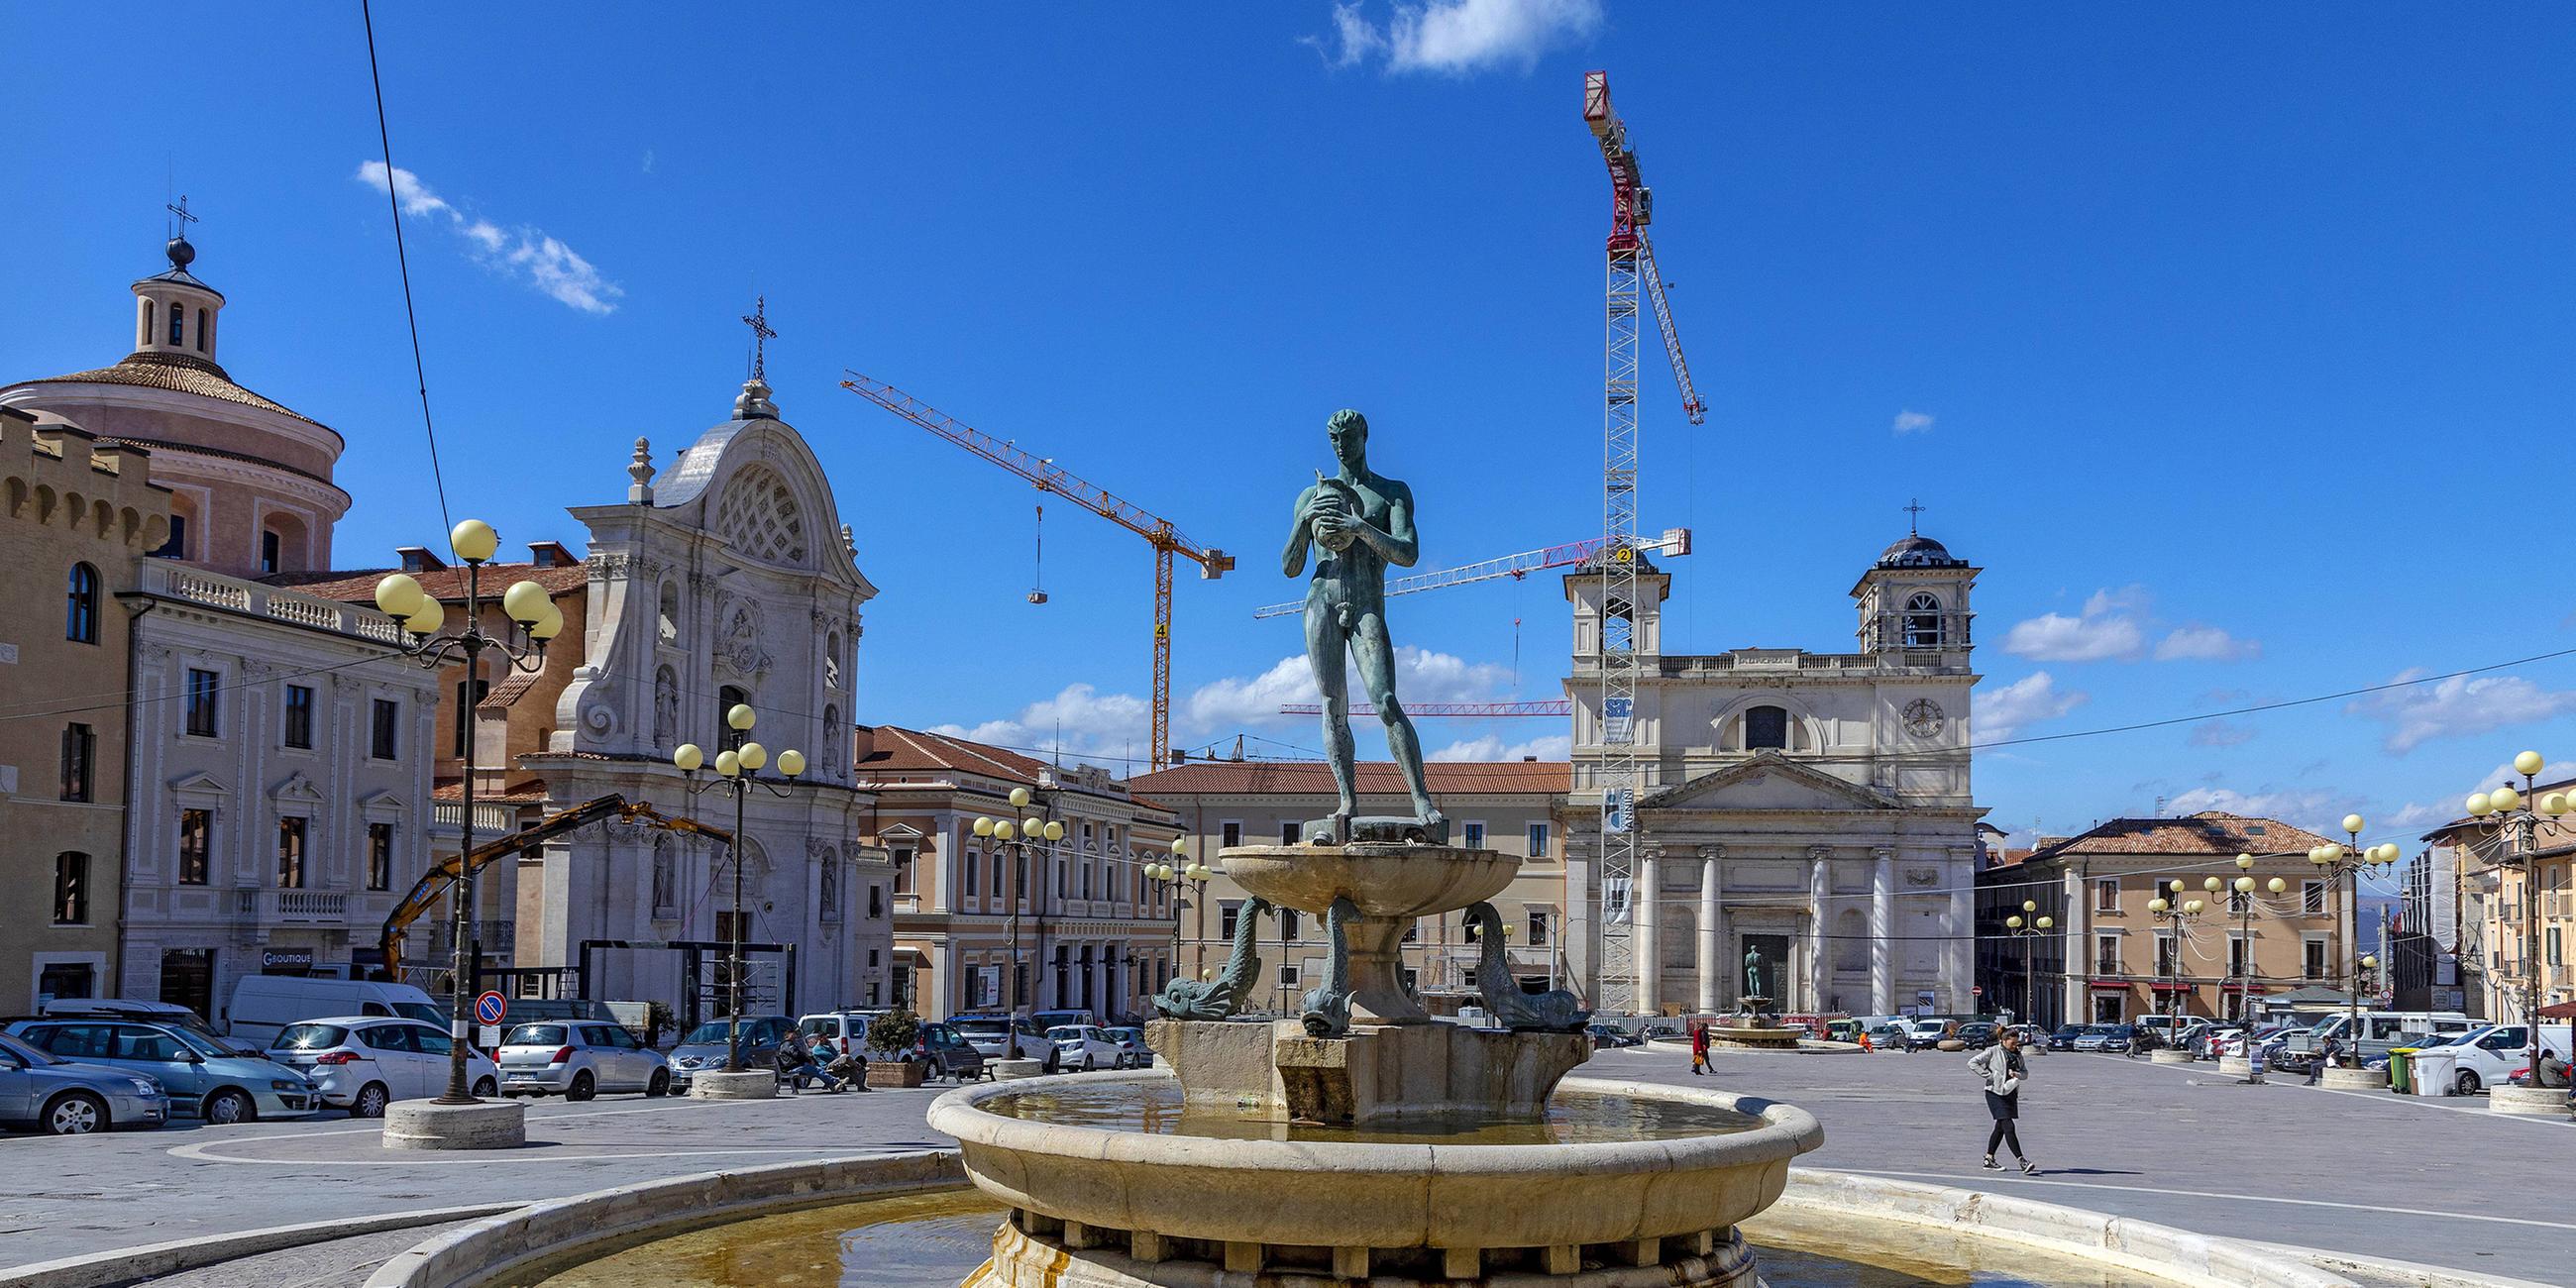 Der Piazza del Duomo in L'Aquila im Jahr 2019